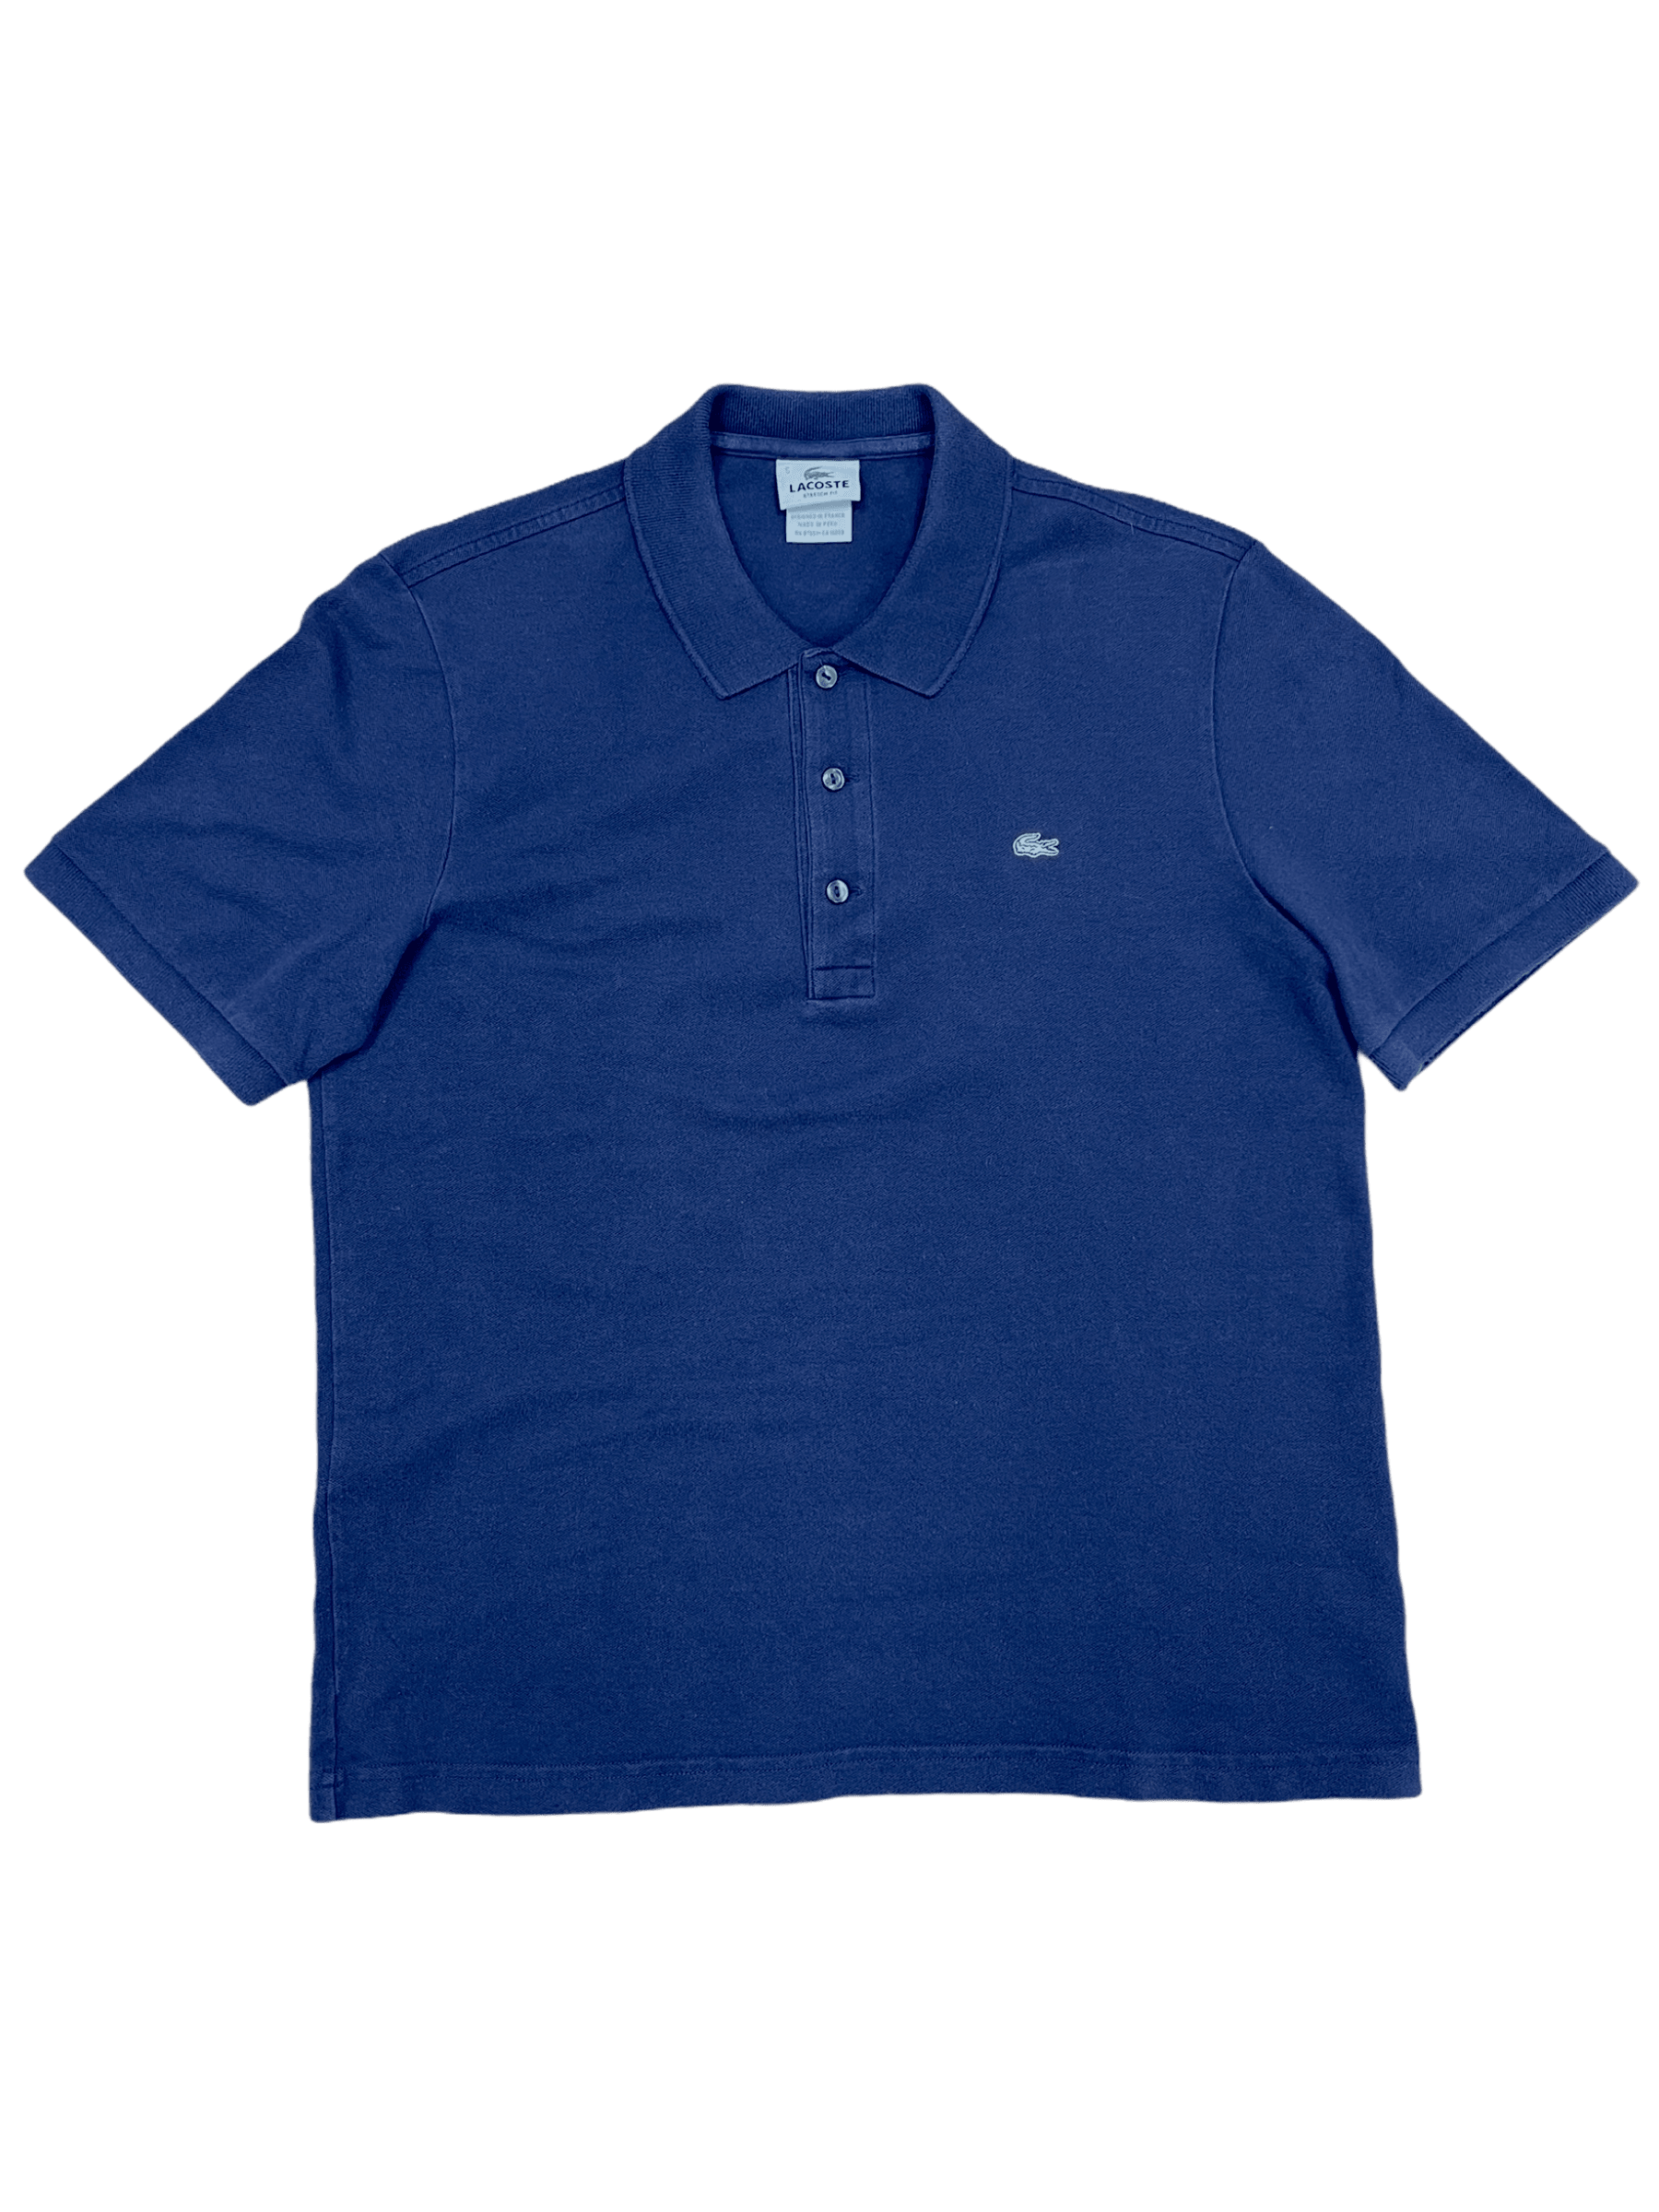 Lacoste Navy Blue Pique Polo Shirt Medium-Genuine Design luxury consignment 